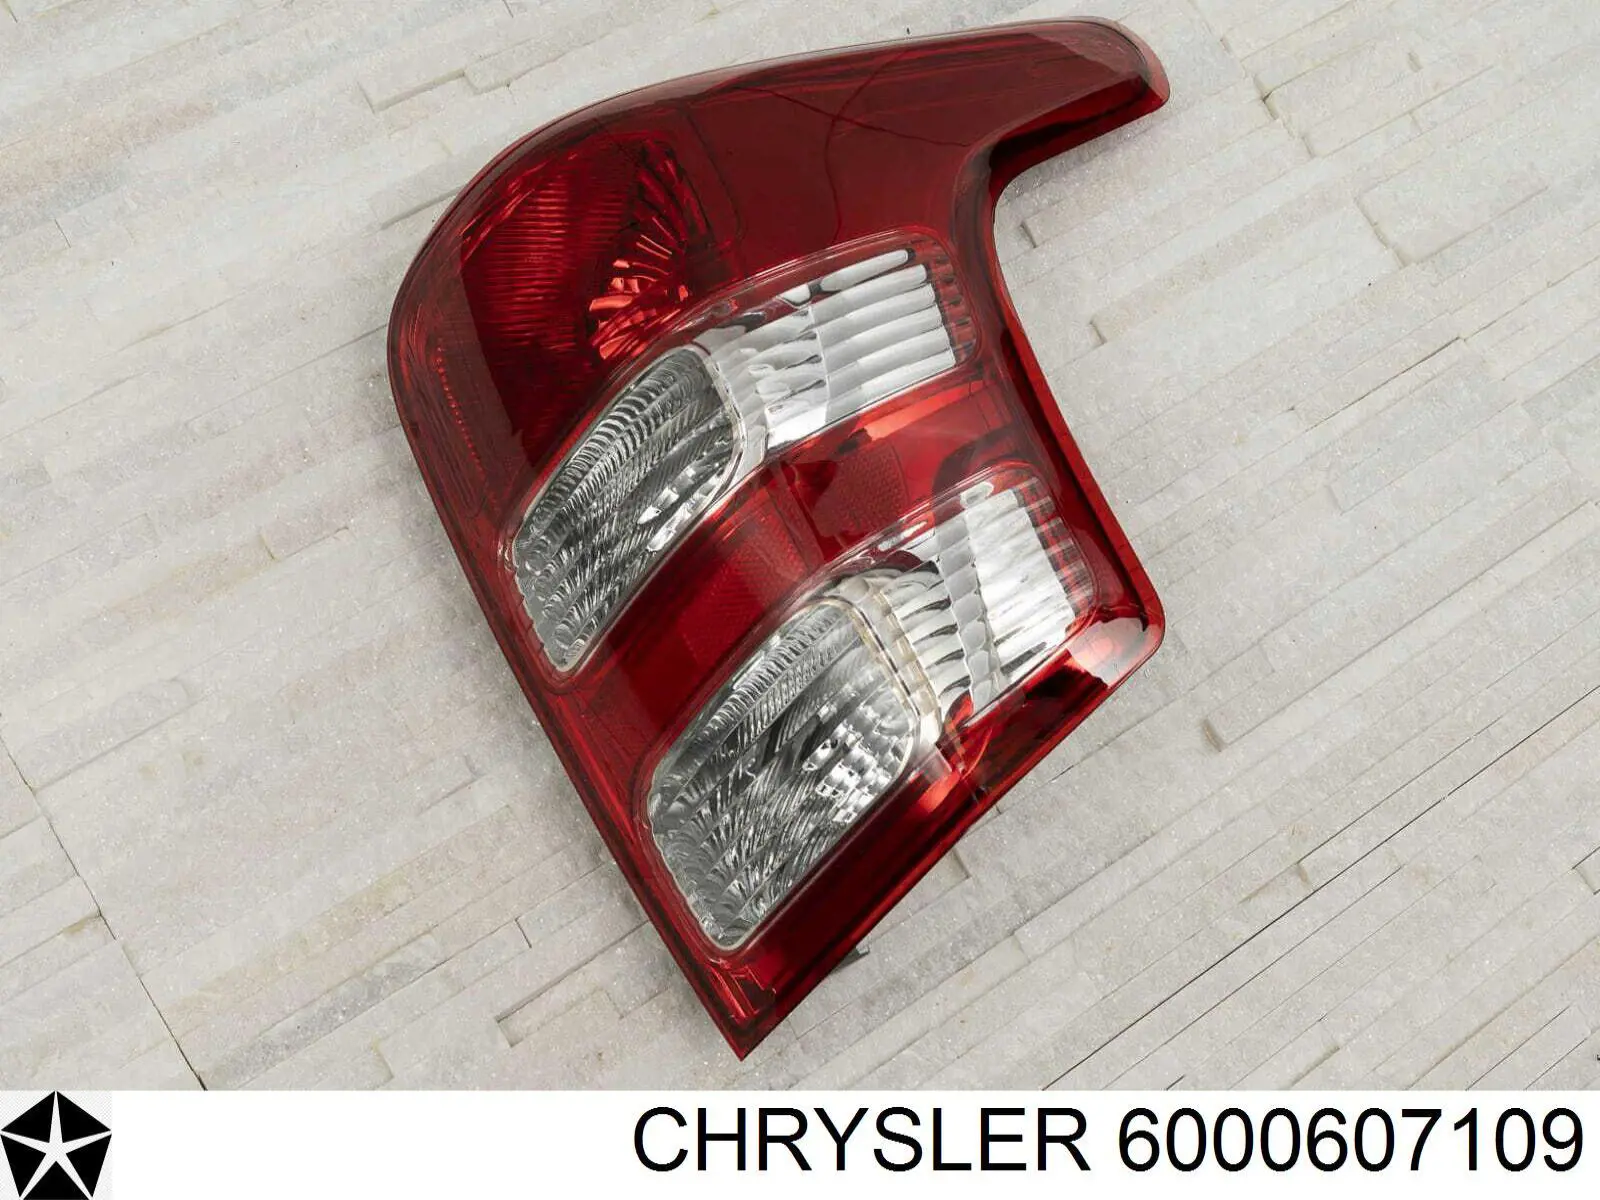 6000607109 Chrysler lanterna traseira direita